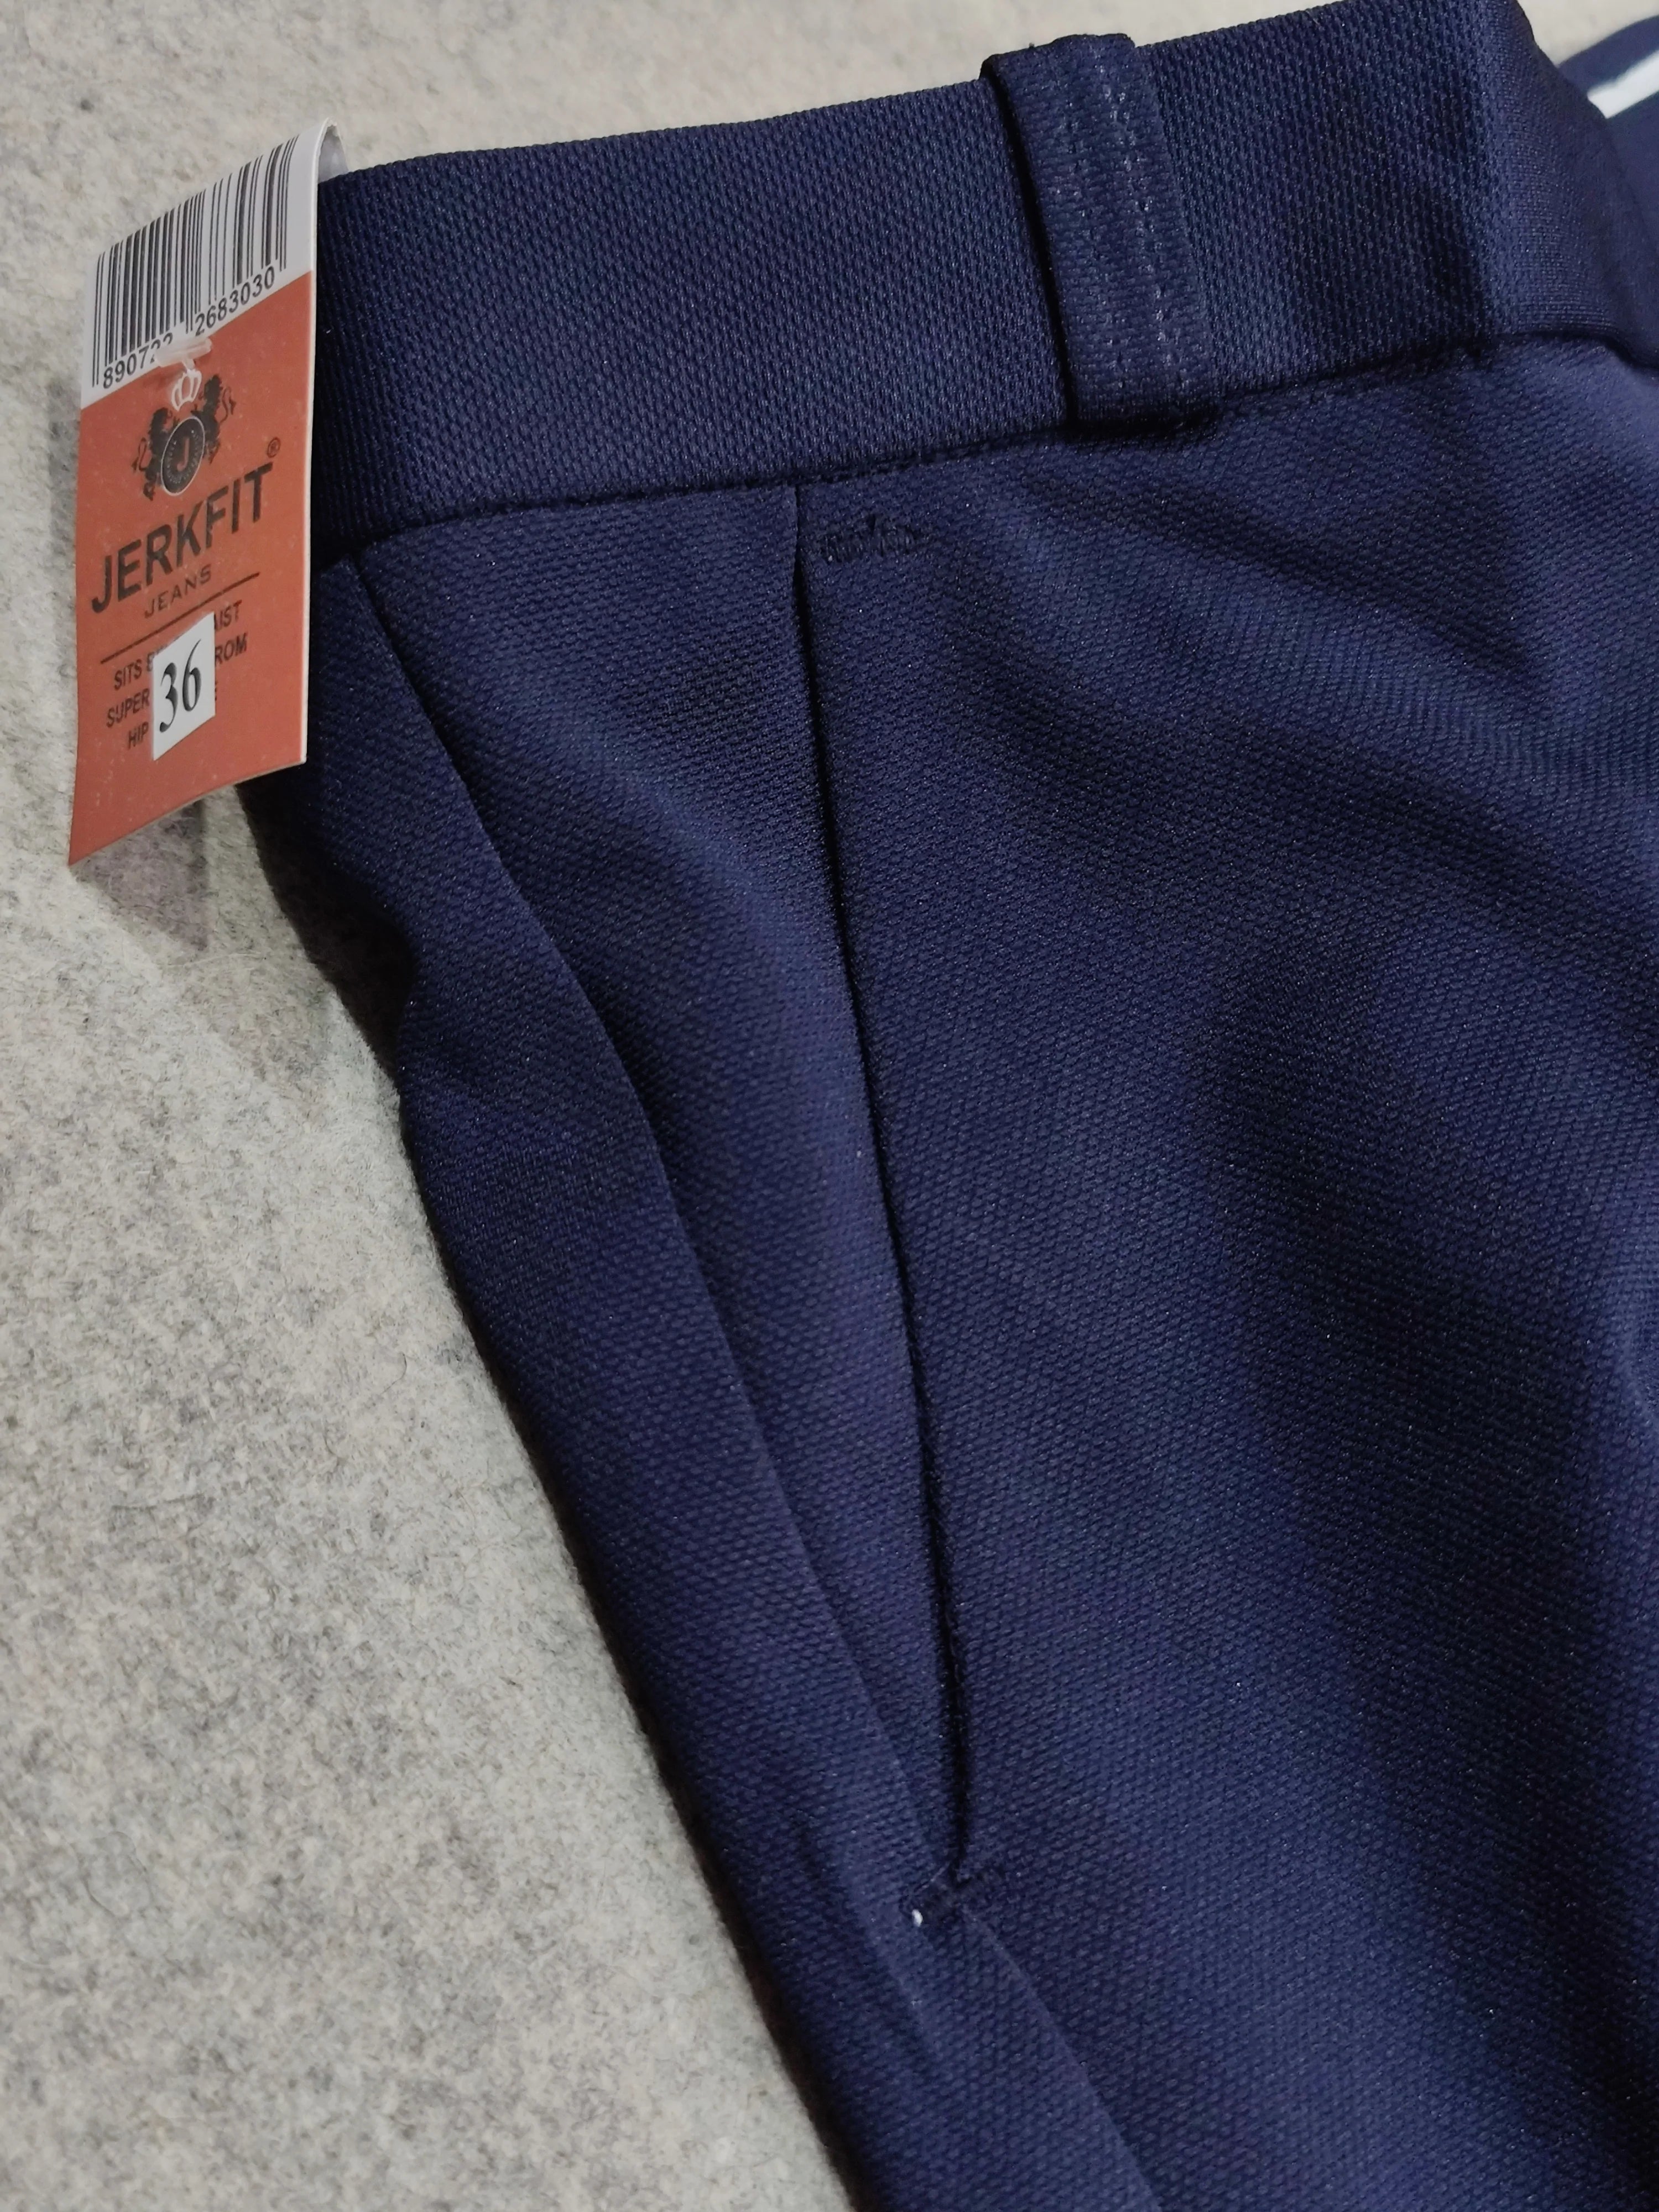 Navy blue suit pants | The Kooples - US